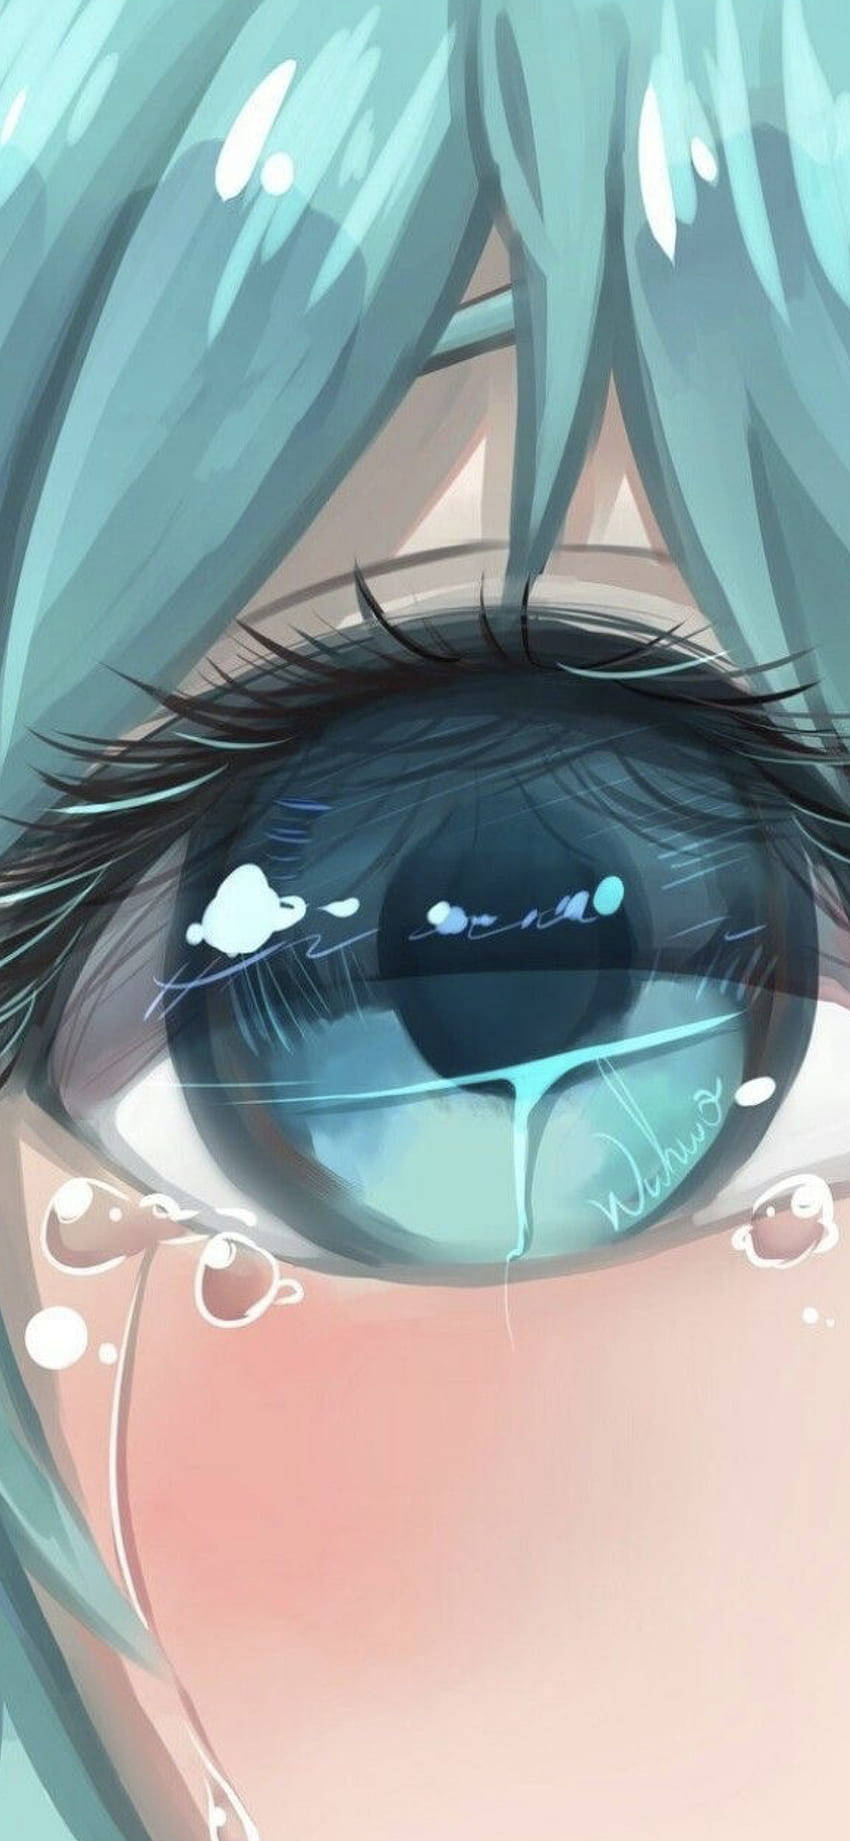 sad anime girl crying with brown hair and blue eyes